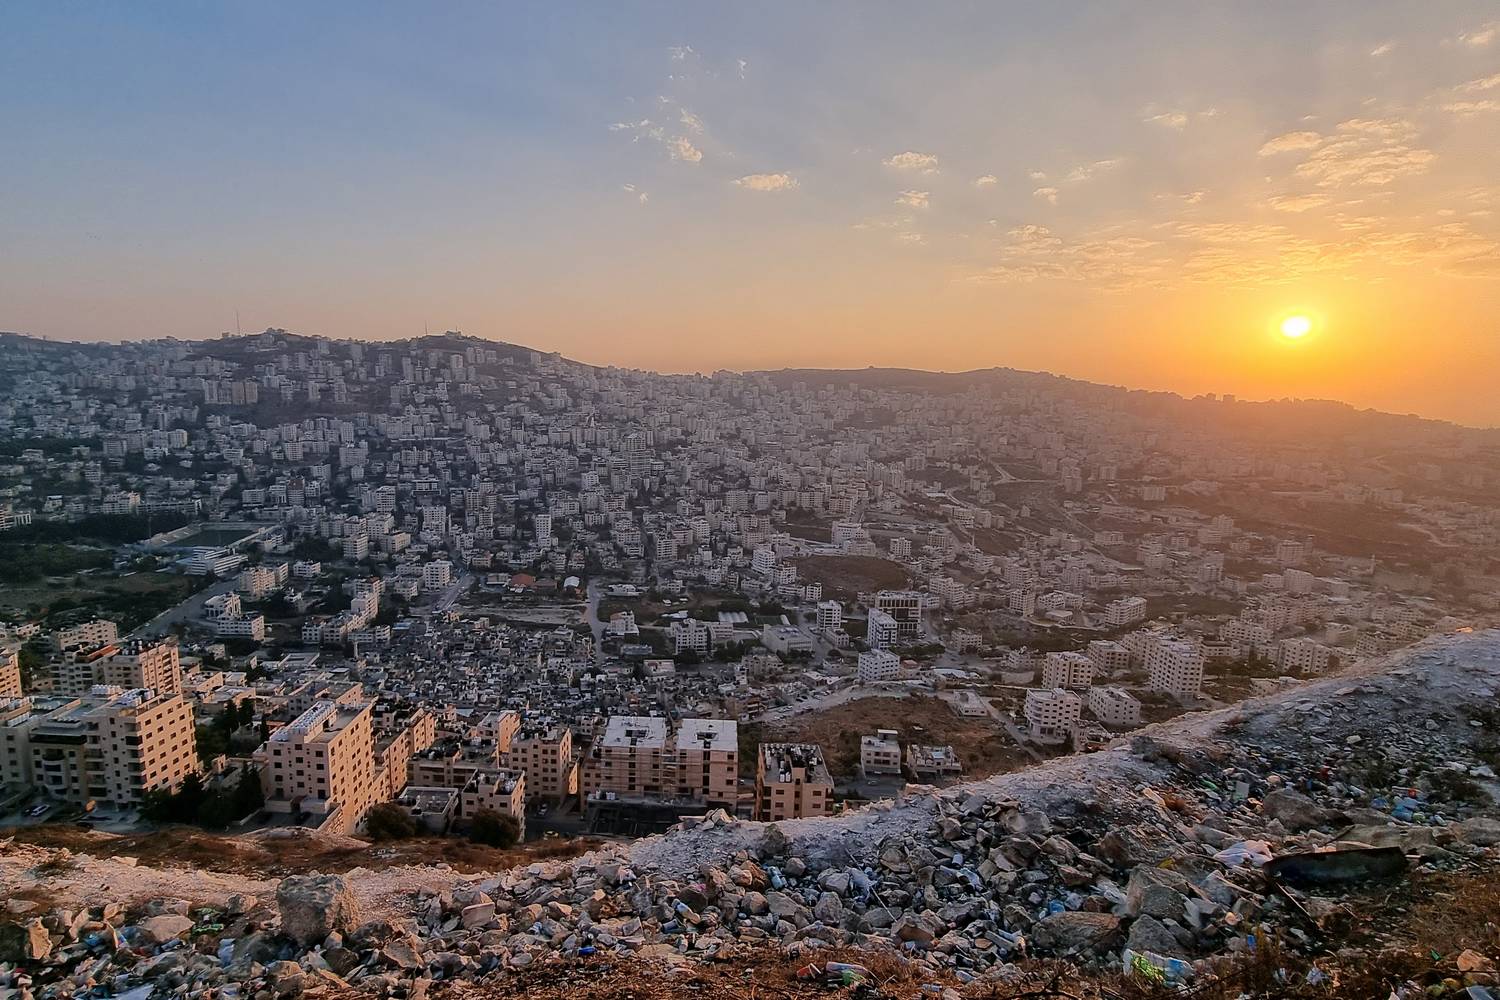 Sunset over Nablus city